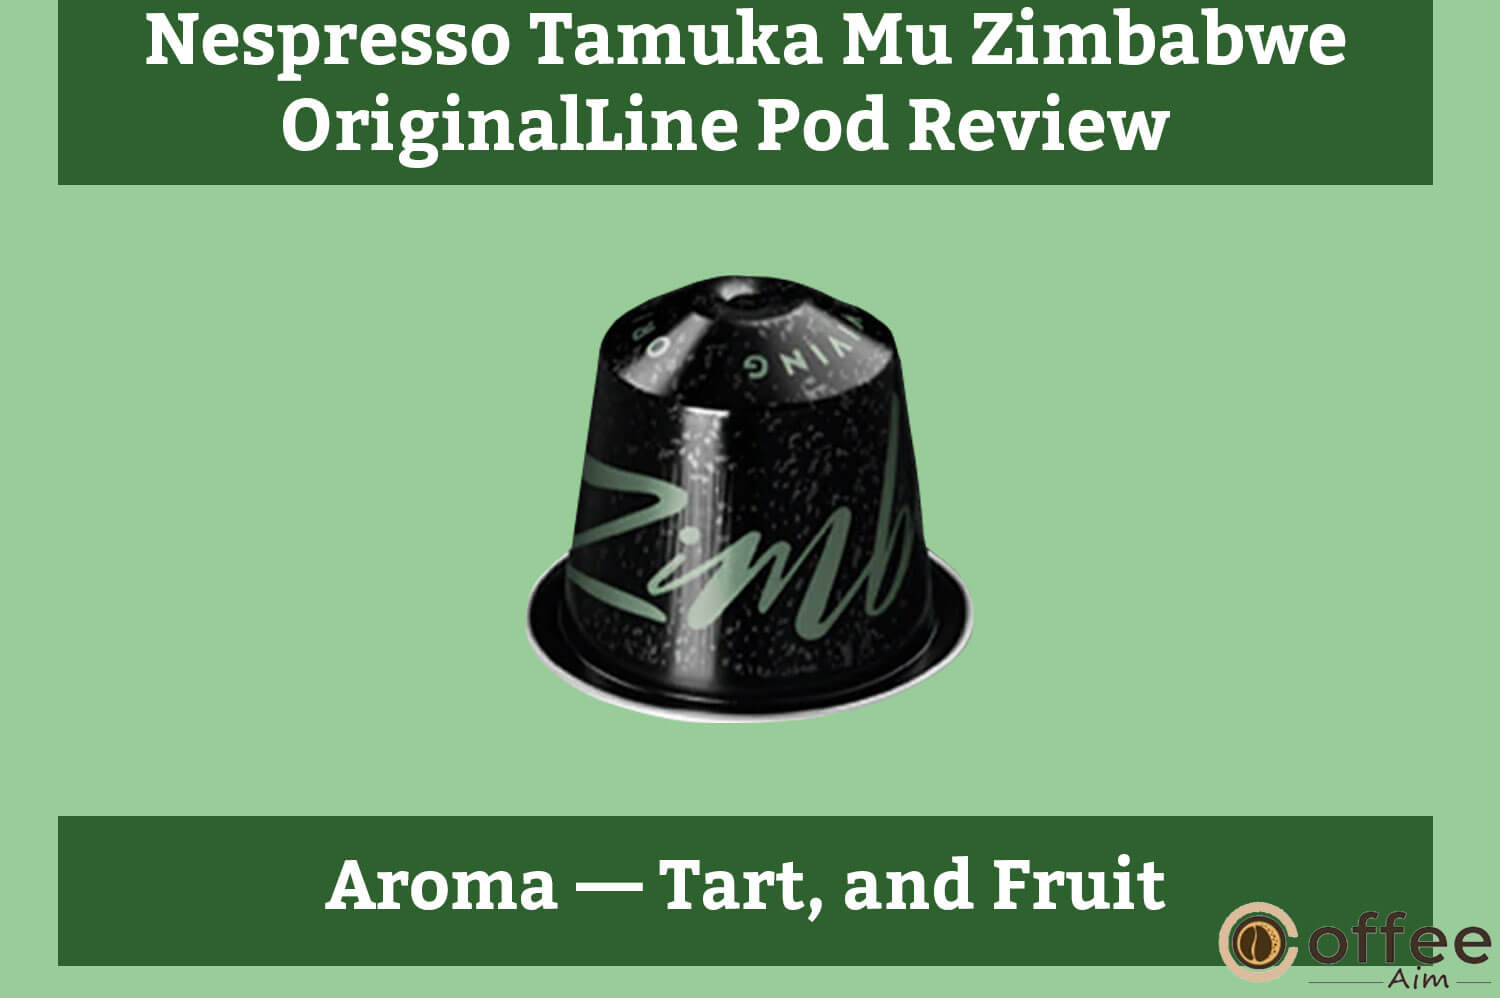 The image depicts the aroma of "Nespresso Tamuka Mu Zimbabwe OriginalLine Pod" discussed in the article "Nespresso Tamuka Mu Zimbabwe Pod Review."